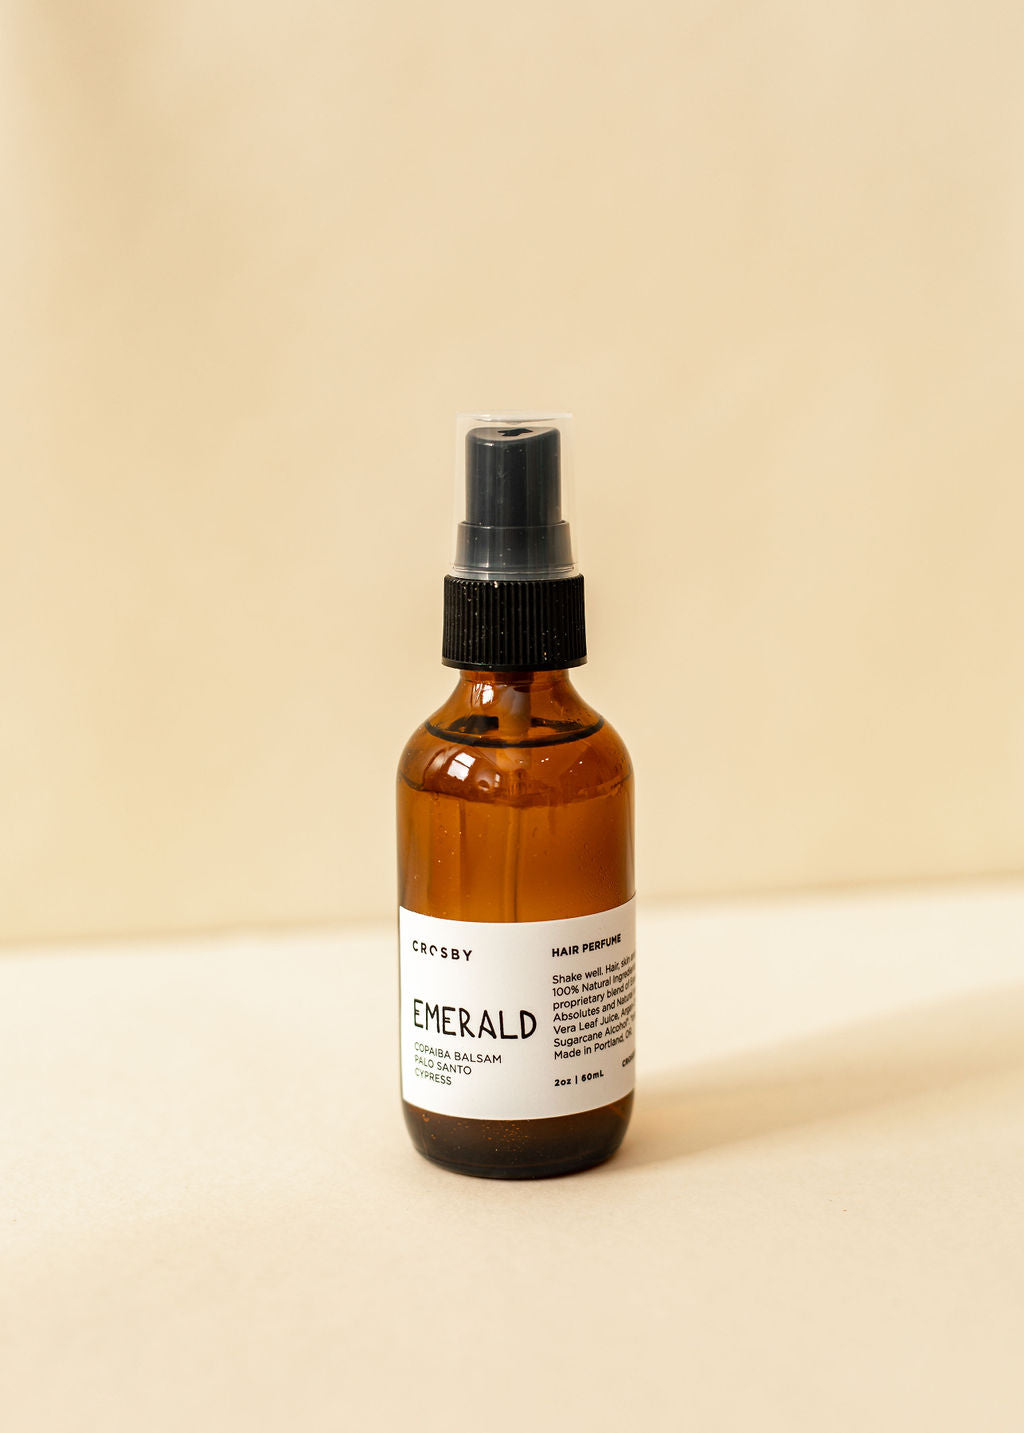 A single amber spray bottle of hair perfume, Emerald